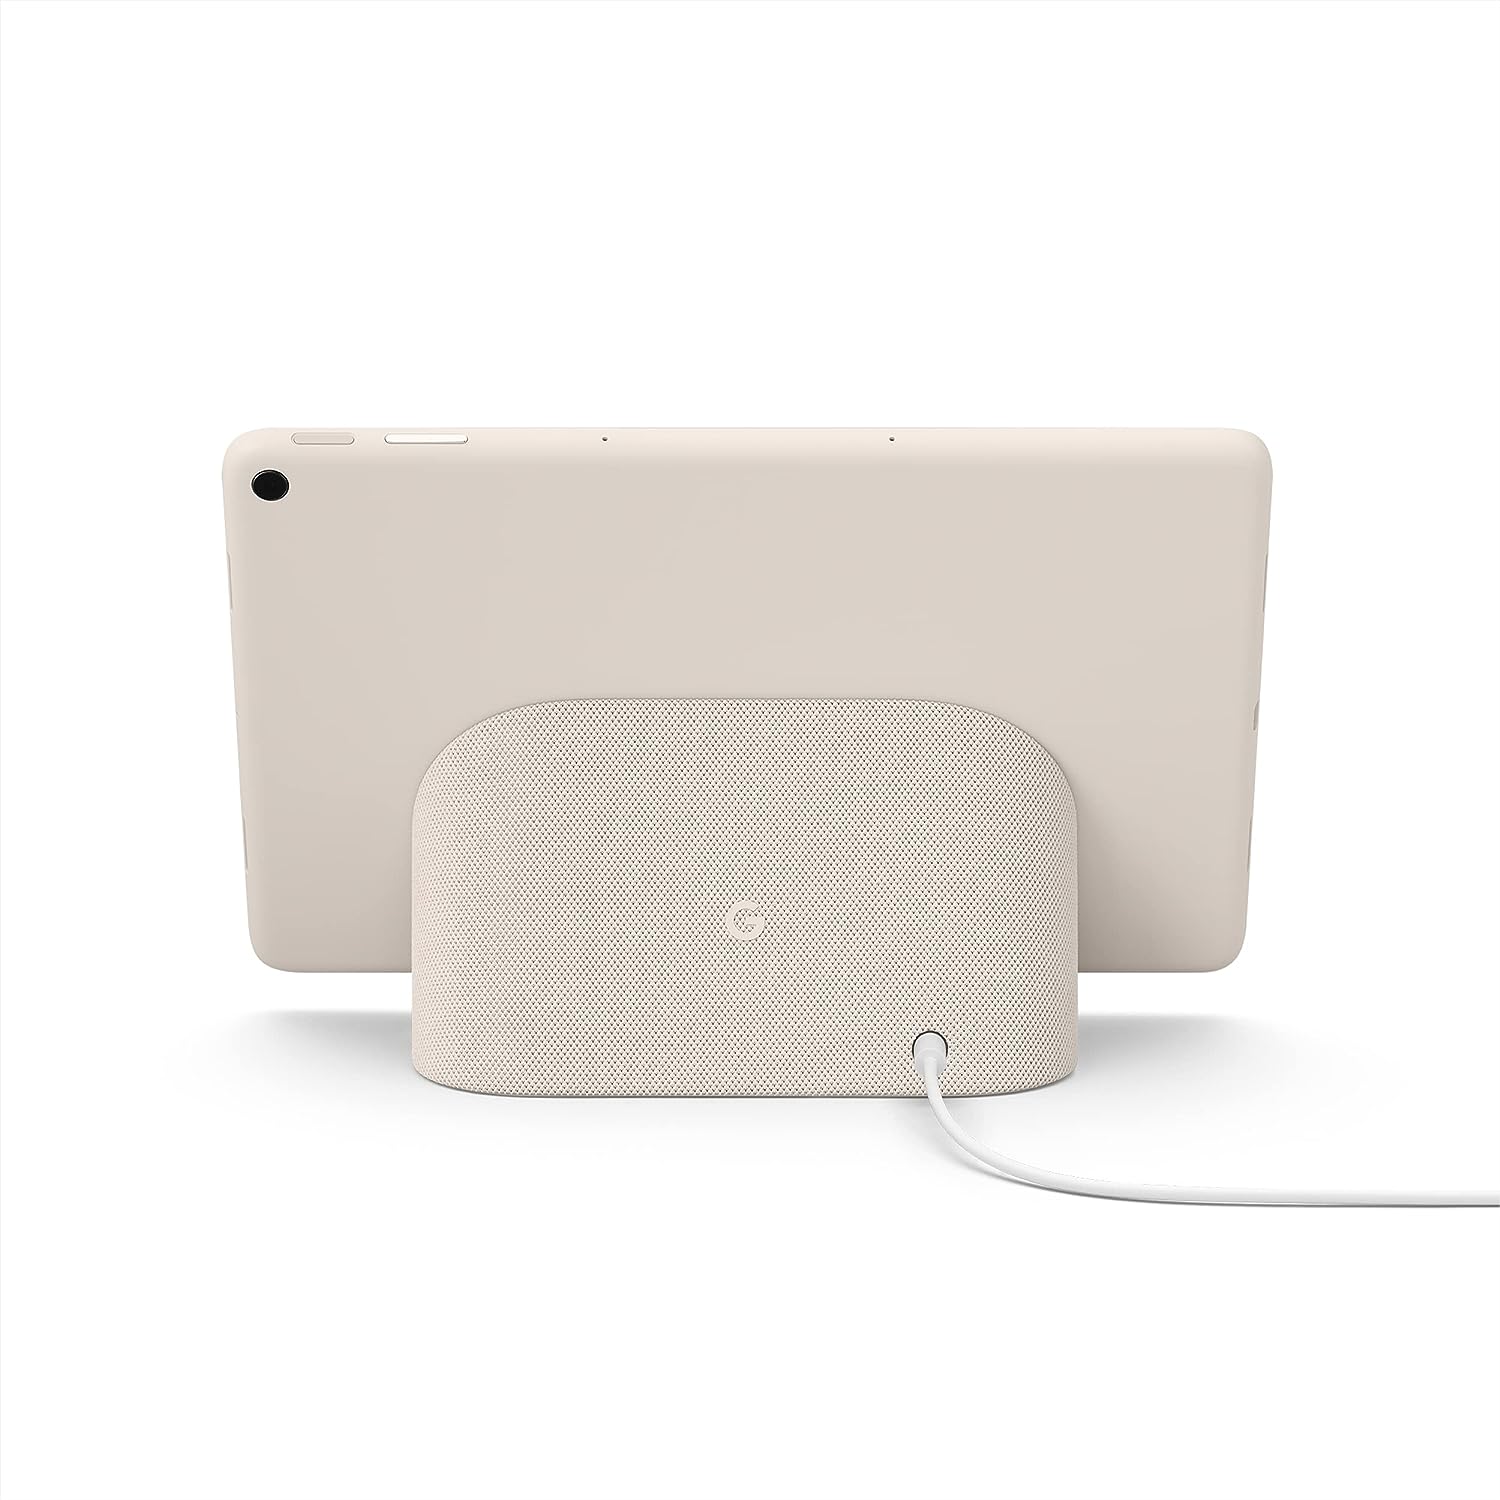 Analysis of Google Pixel Tablet with Charging Speaker Dock - Porcelain/Porcelain - 128 GB